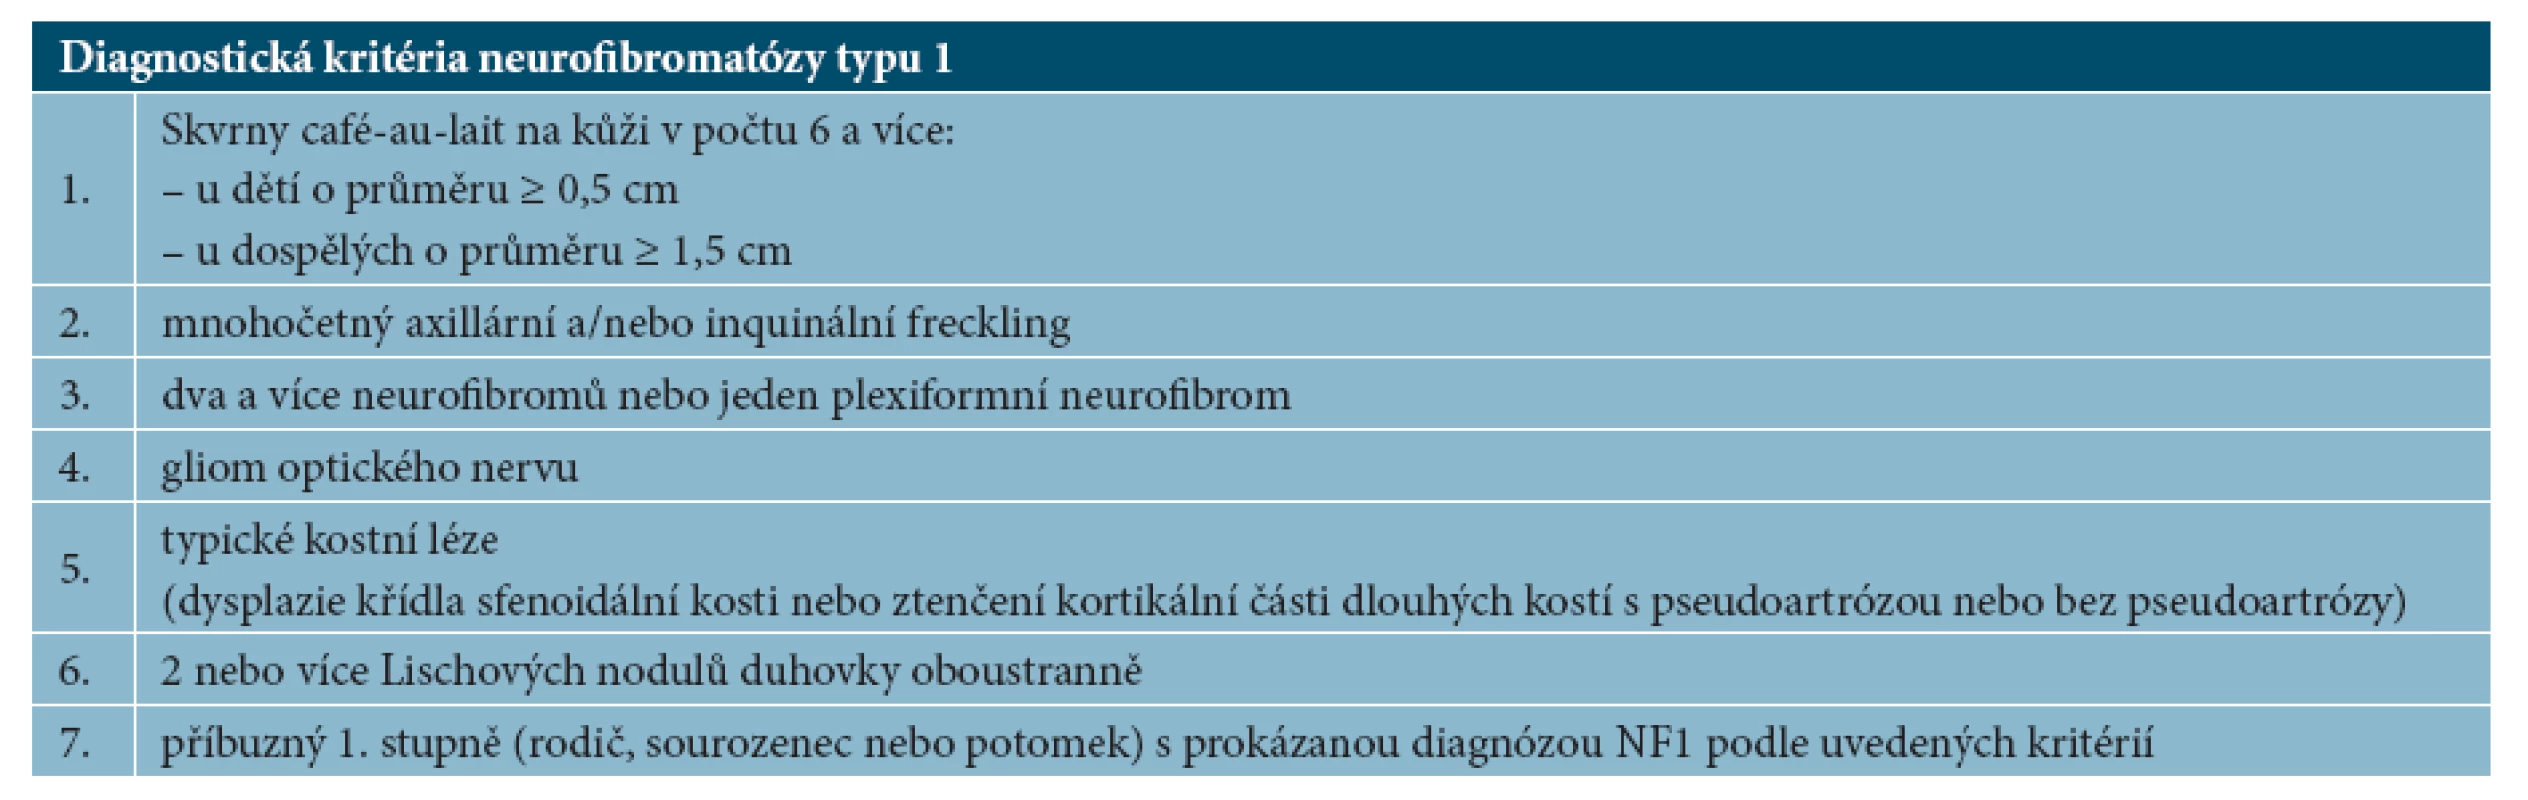 Diagnostická kritéria neurofibromatózy typu 1